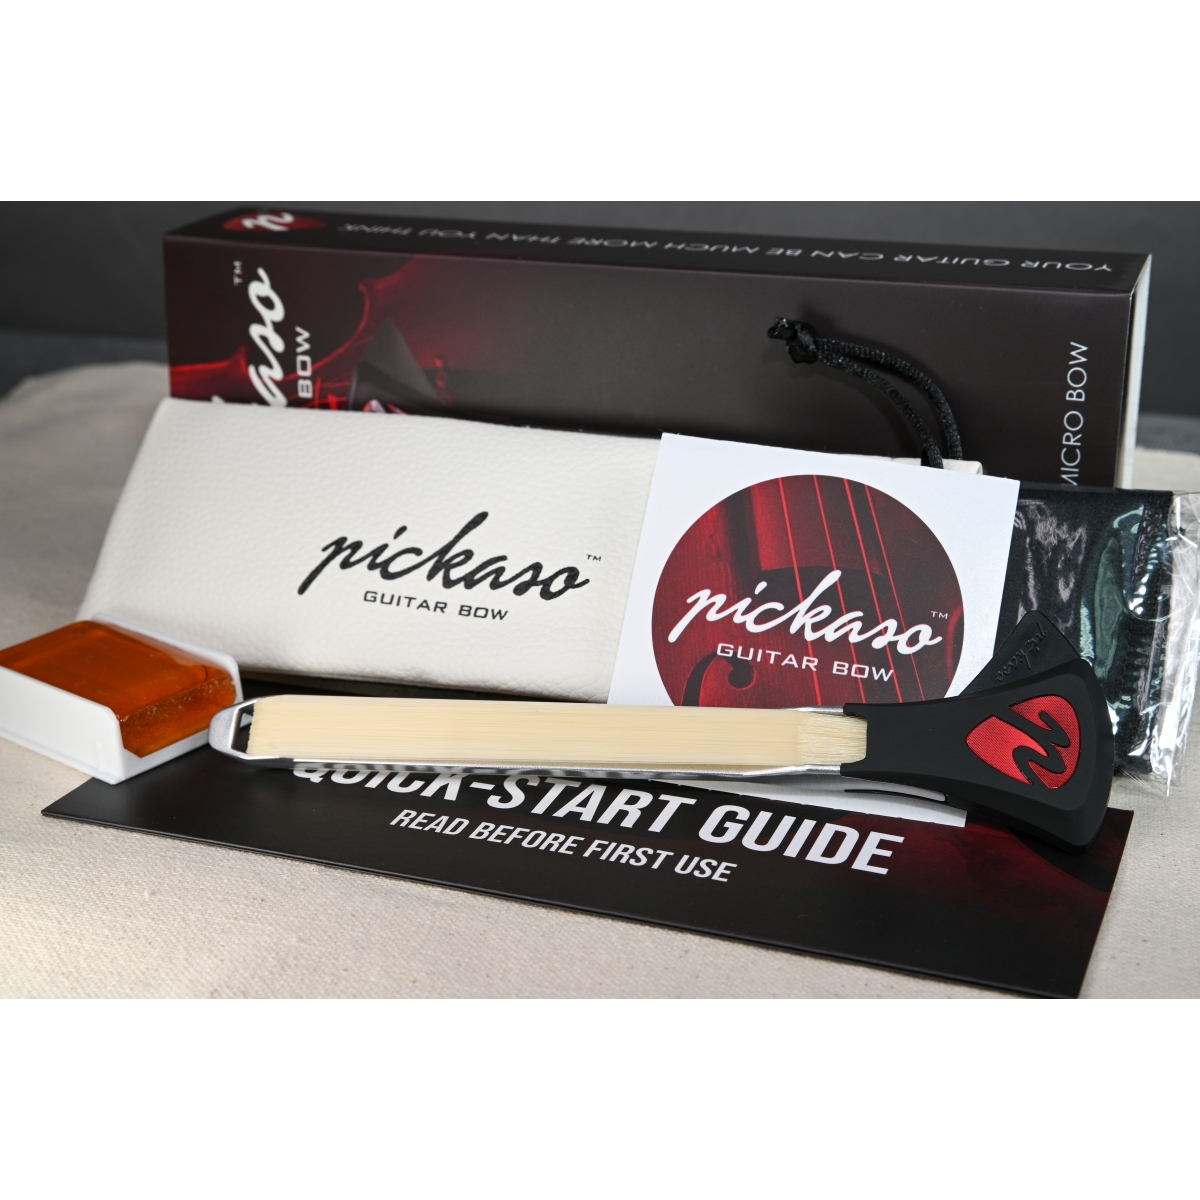 Pickaso Guitar Bow kit - Classical Model, Pickaso Guitar Bow